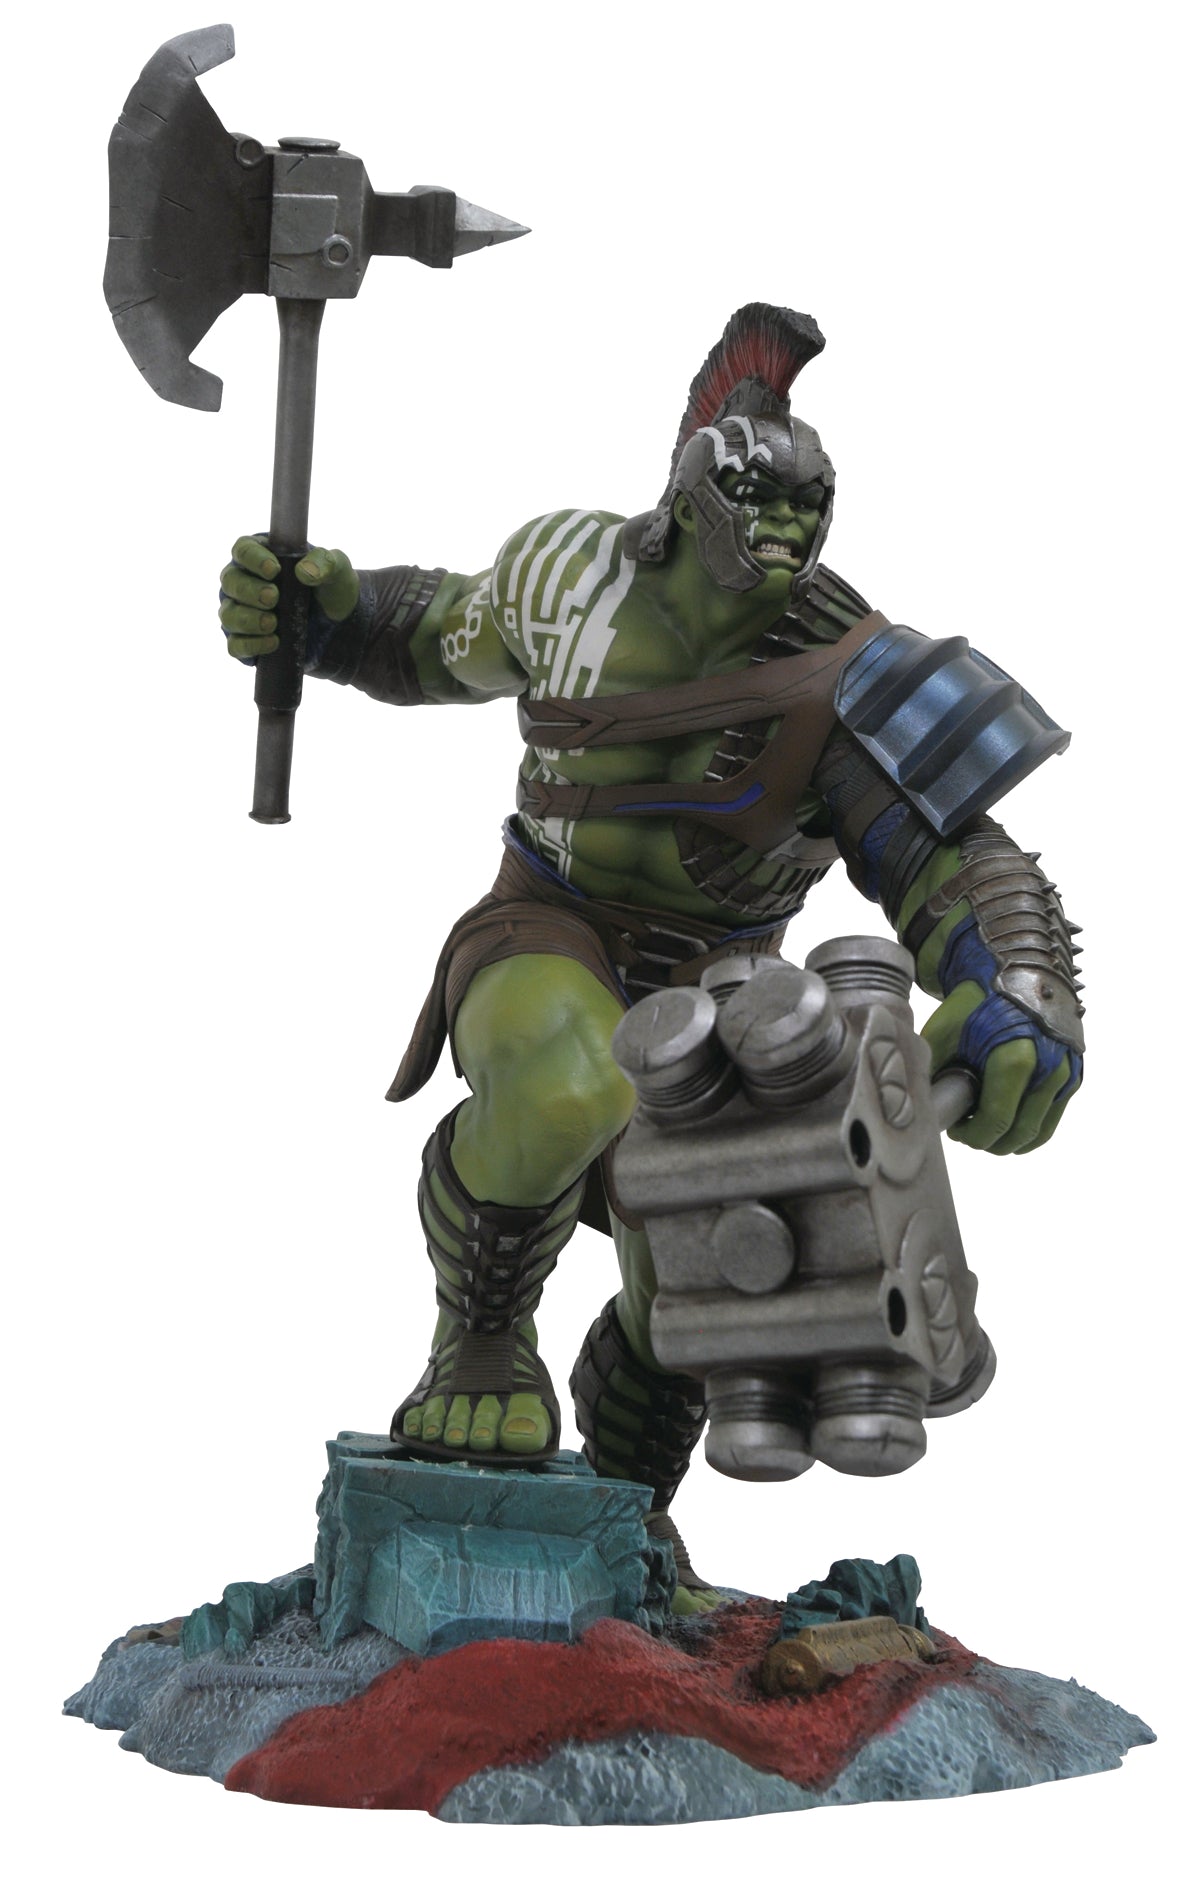 Marvel Gallery Thor Ragnarok Gladiator Hulk 12 Inch PVC Diorama Figure